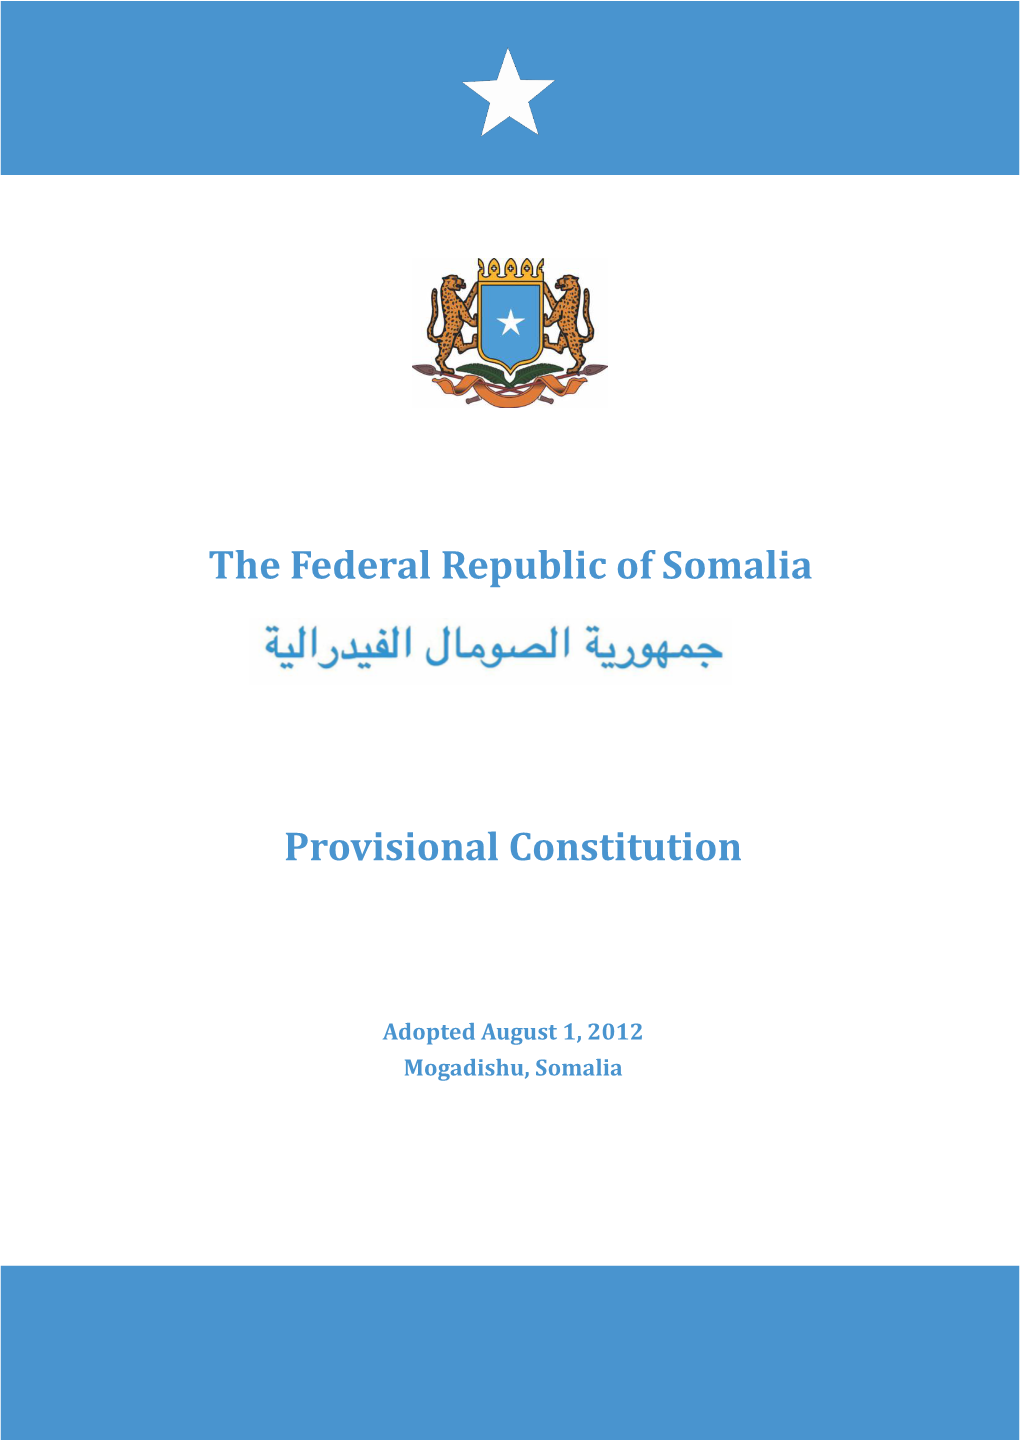 The Federal Republic of Somalia Provisional Constitution